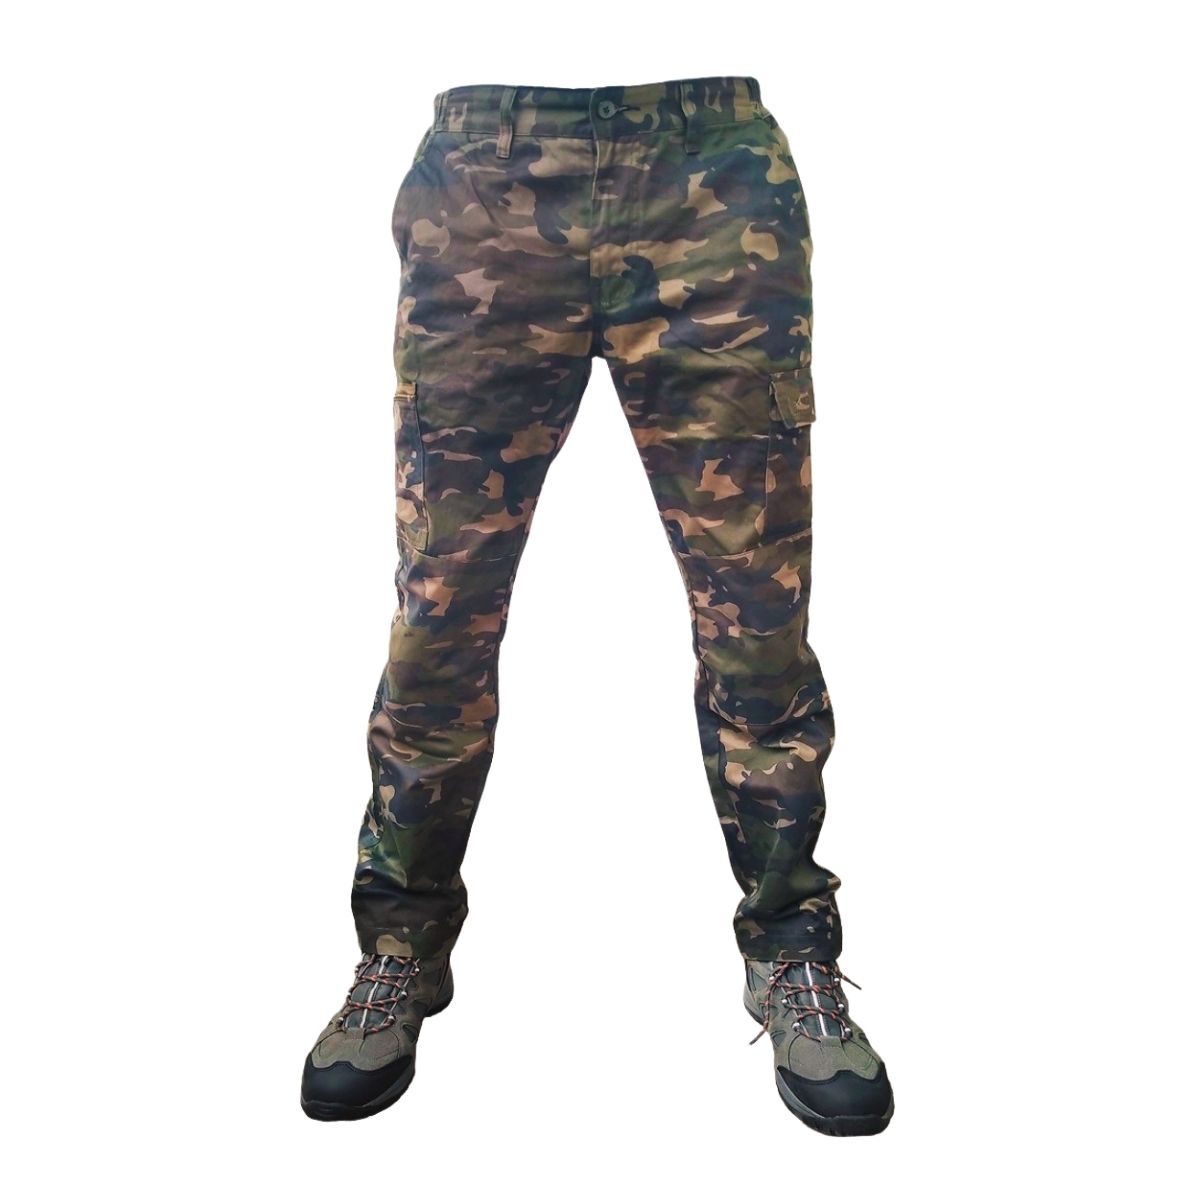 Craghoppers Bear Grylls Men's Survivor Trousers 34R Hiking Cargo Pants – CDE